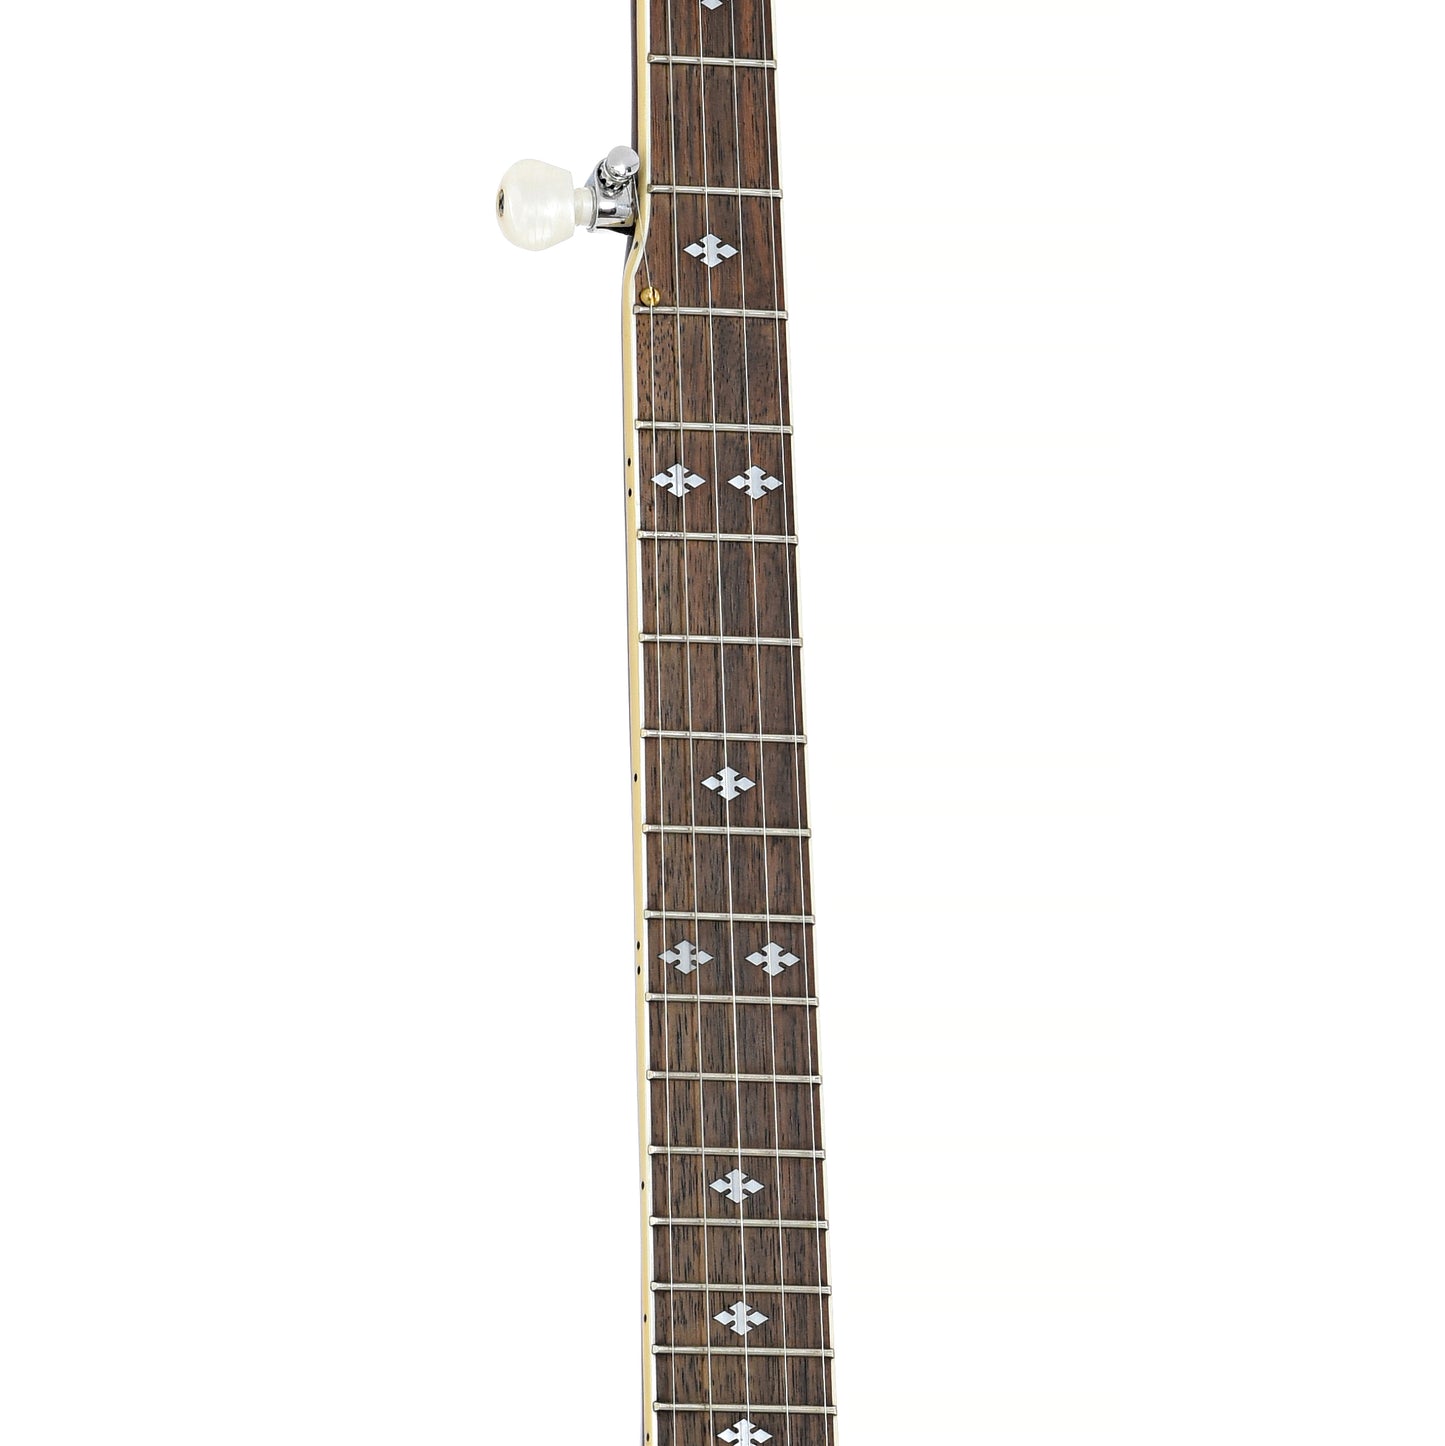 Gold Tone BG-250F Bluegrass Special Resonator Banjo (c.2004)